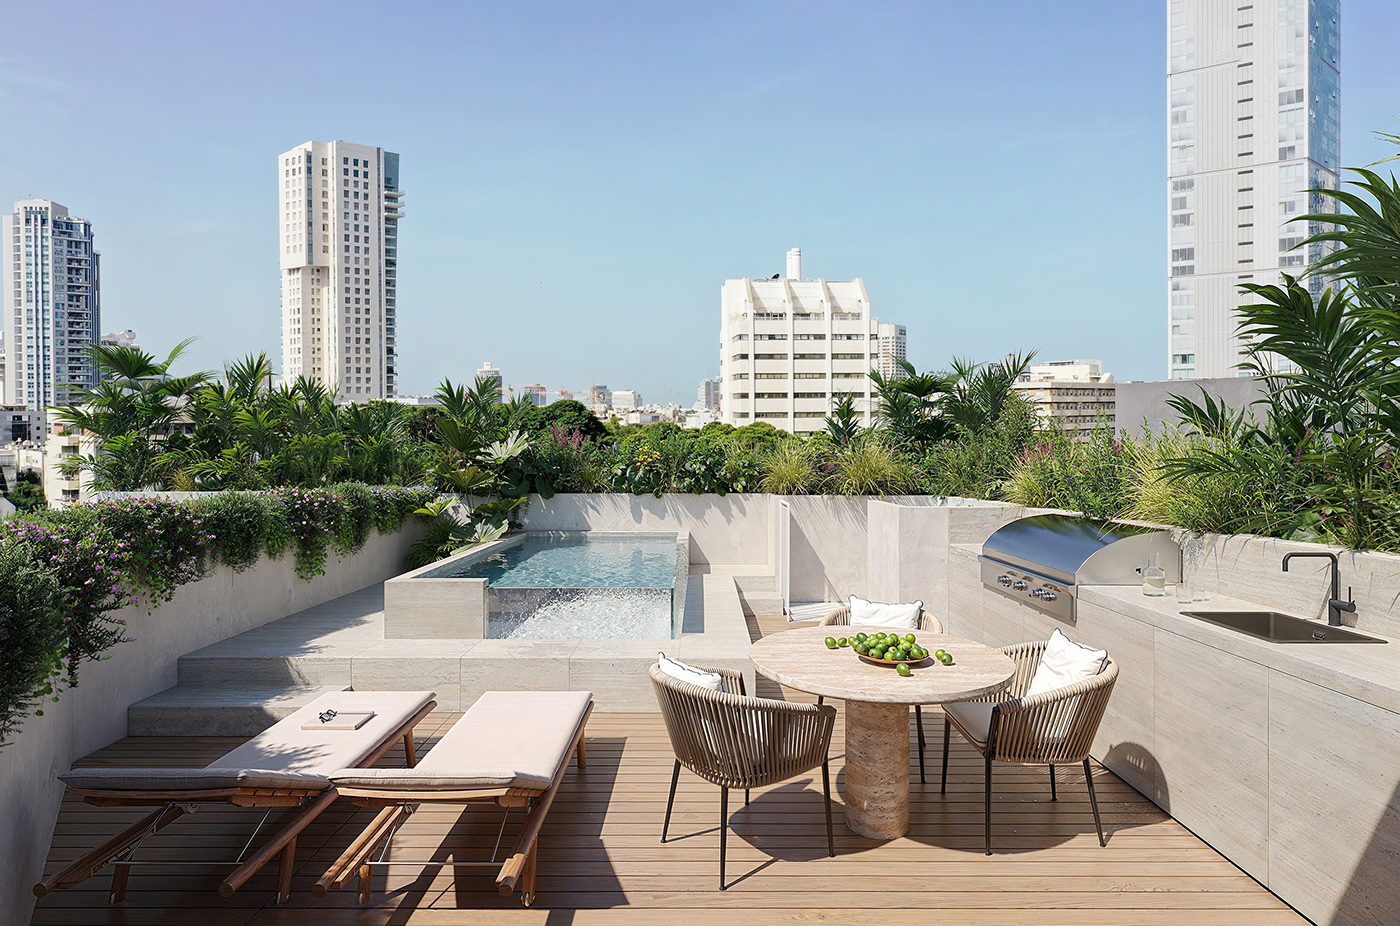 architecture interior design  visualization Render 3D archviz Lobby apartment rooftop residential